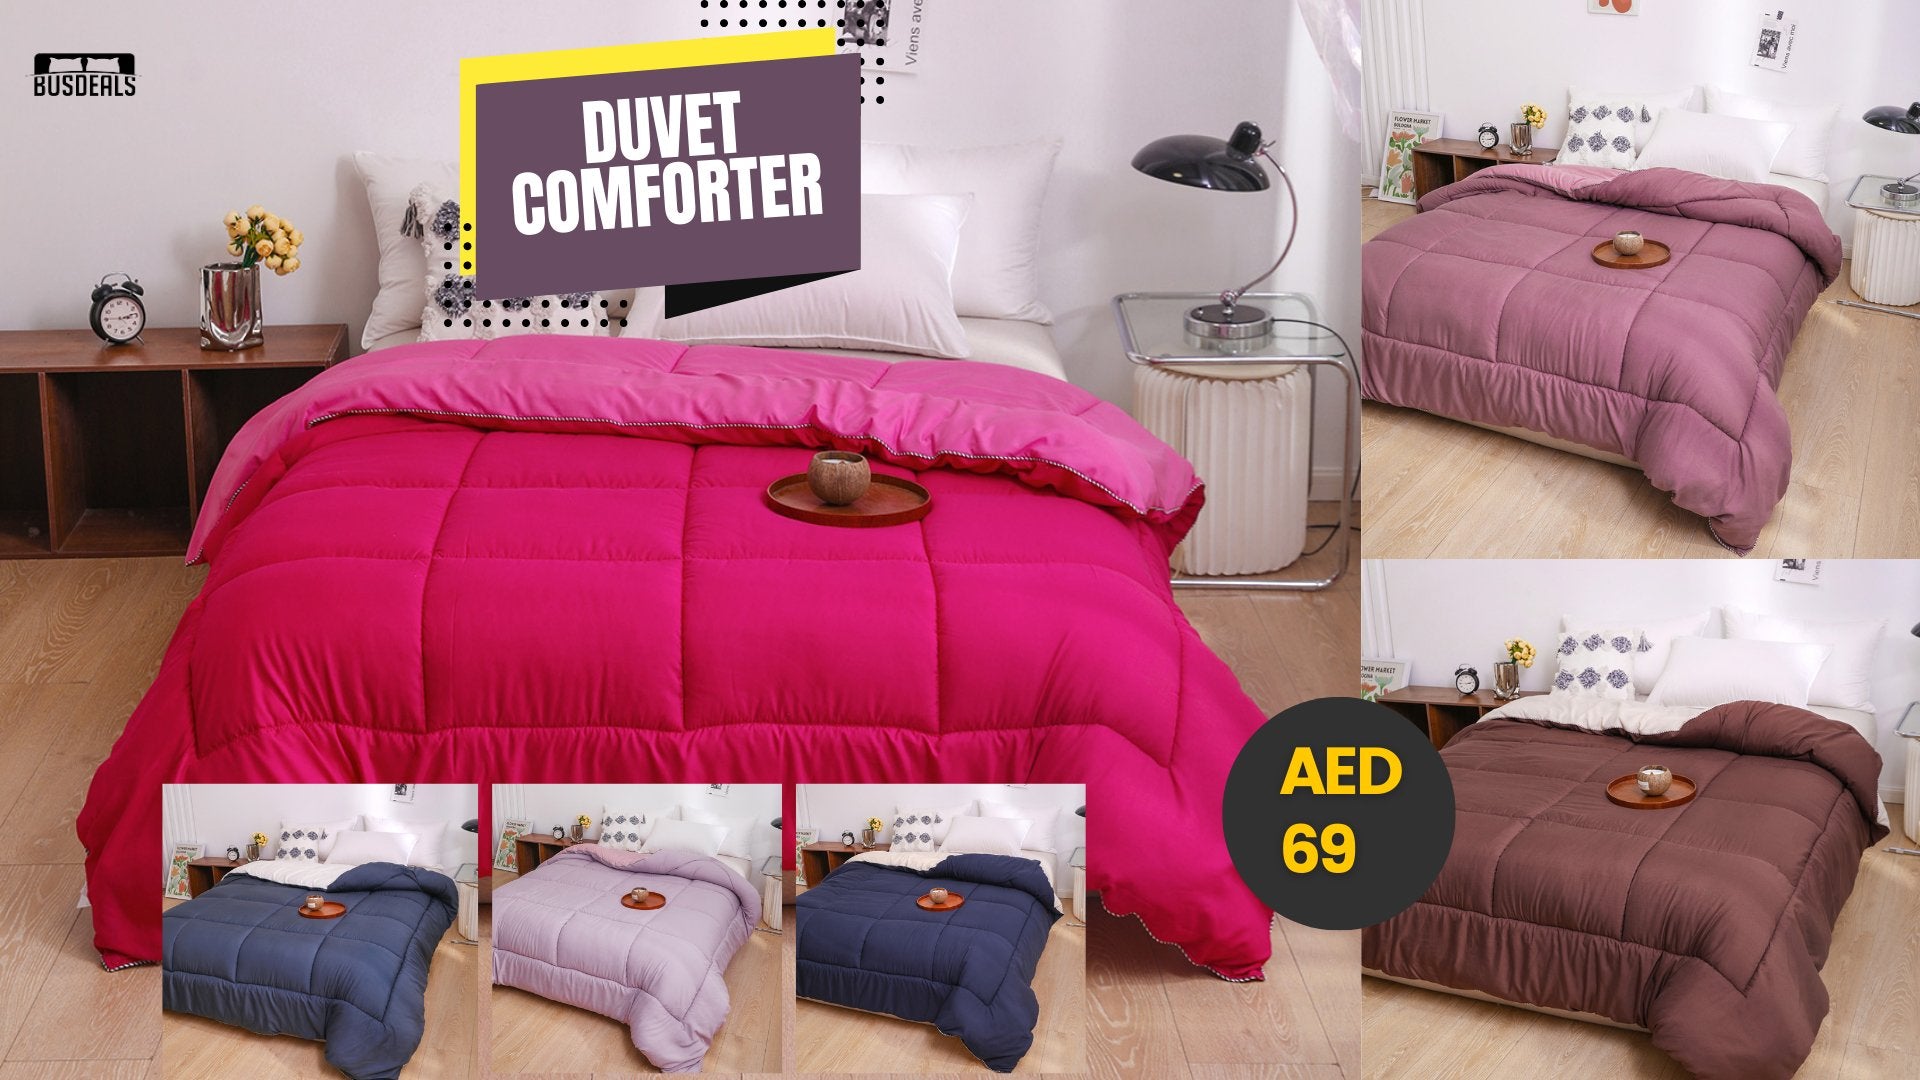 Experience Cozy Comfort with Duvet Cover Comforter from Busdeals Today - BusDeals